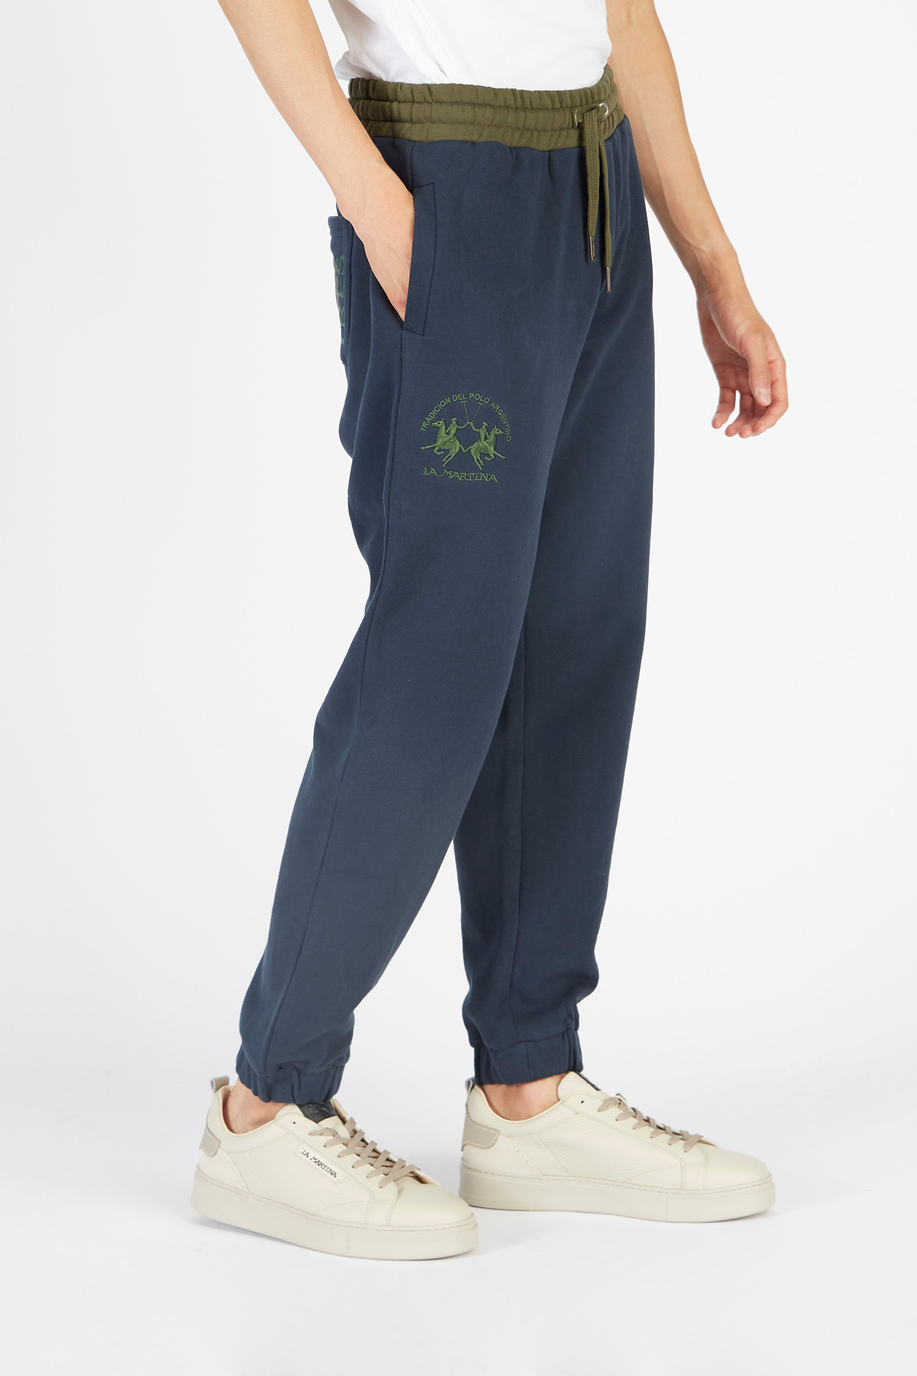 Pantalones de chándal de algodón para hombre ajuste còmodo - Clubhouse outfits | La Martina - Official Online Shop